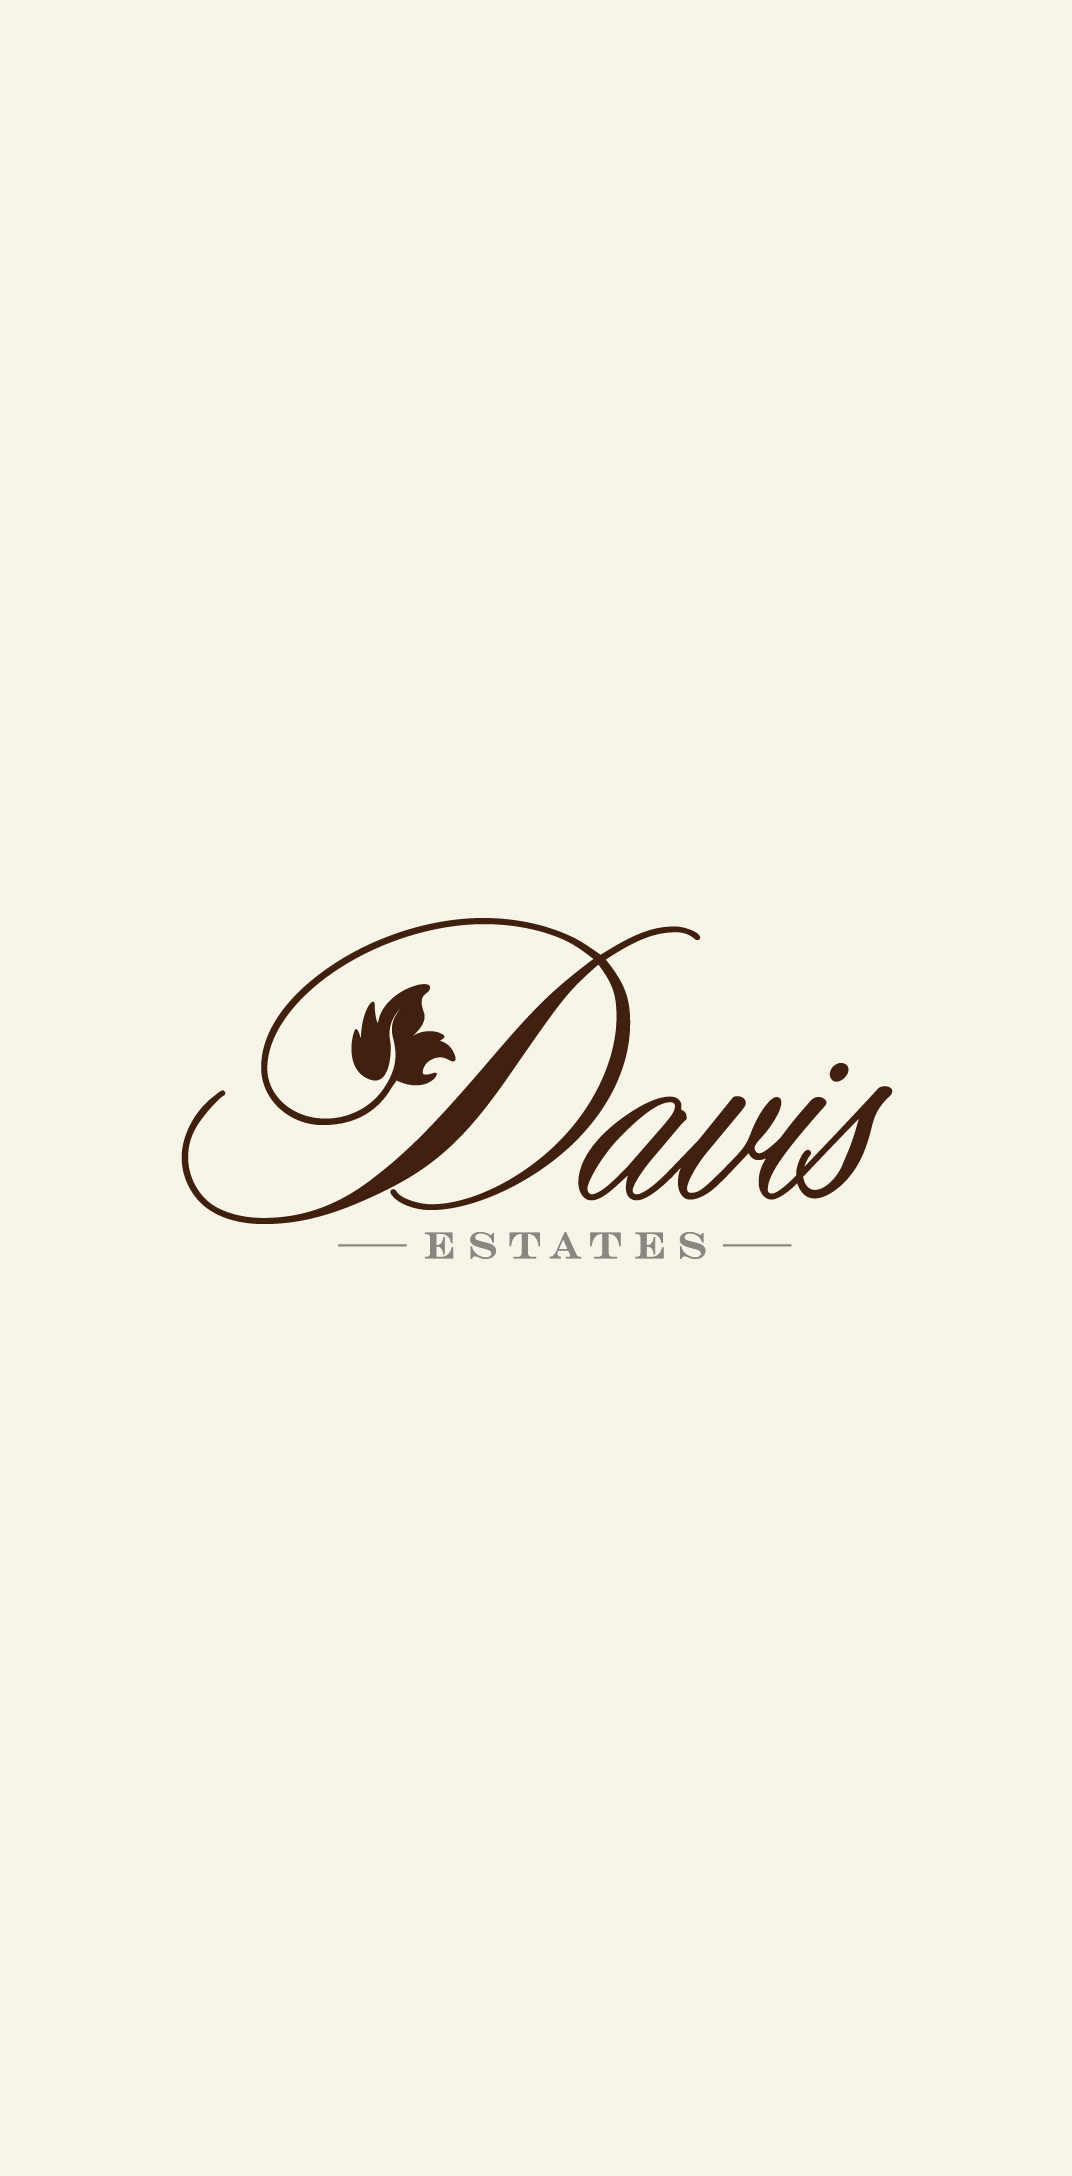 Davis Estates Logo Design